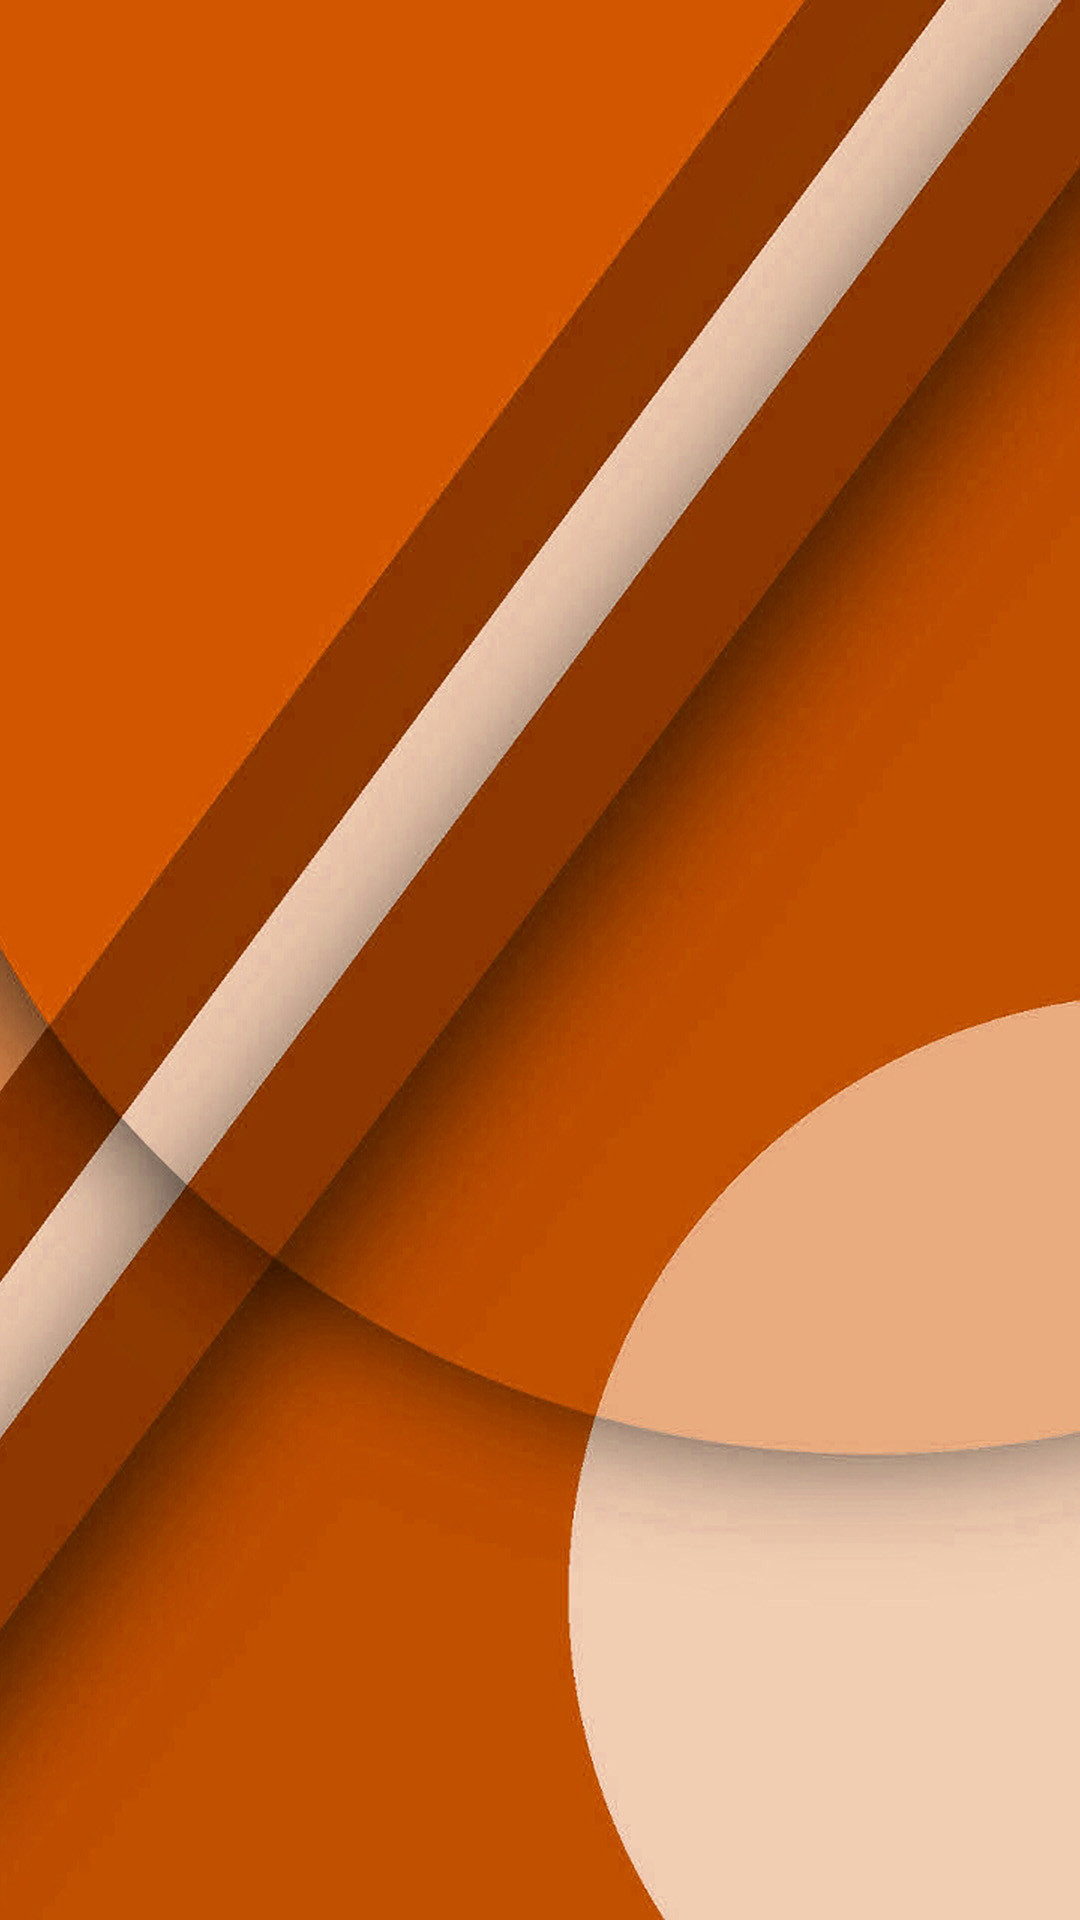 1080x1920 orange geometric iphone 6 plus wallpaper | iPhone 6 Plus Wallpapers HD .